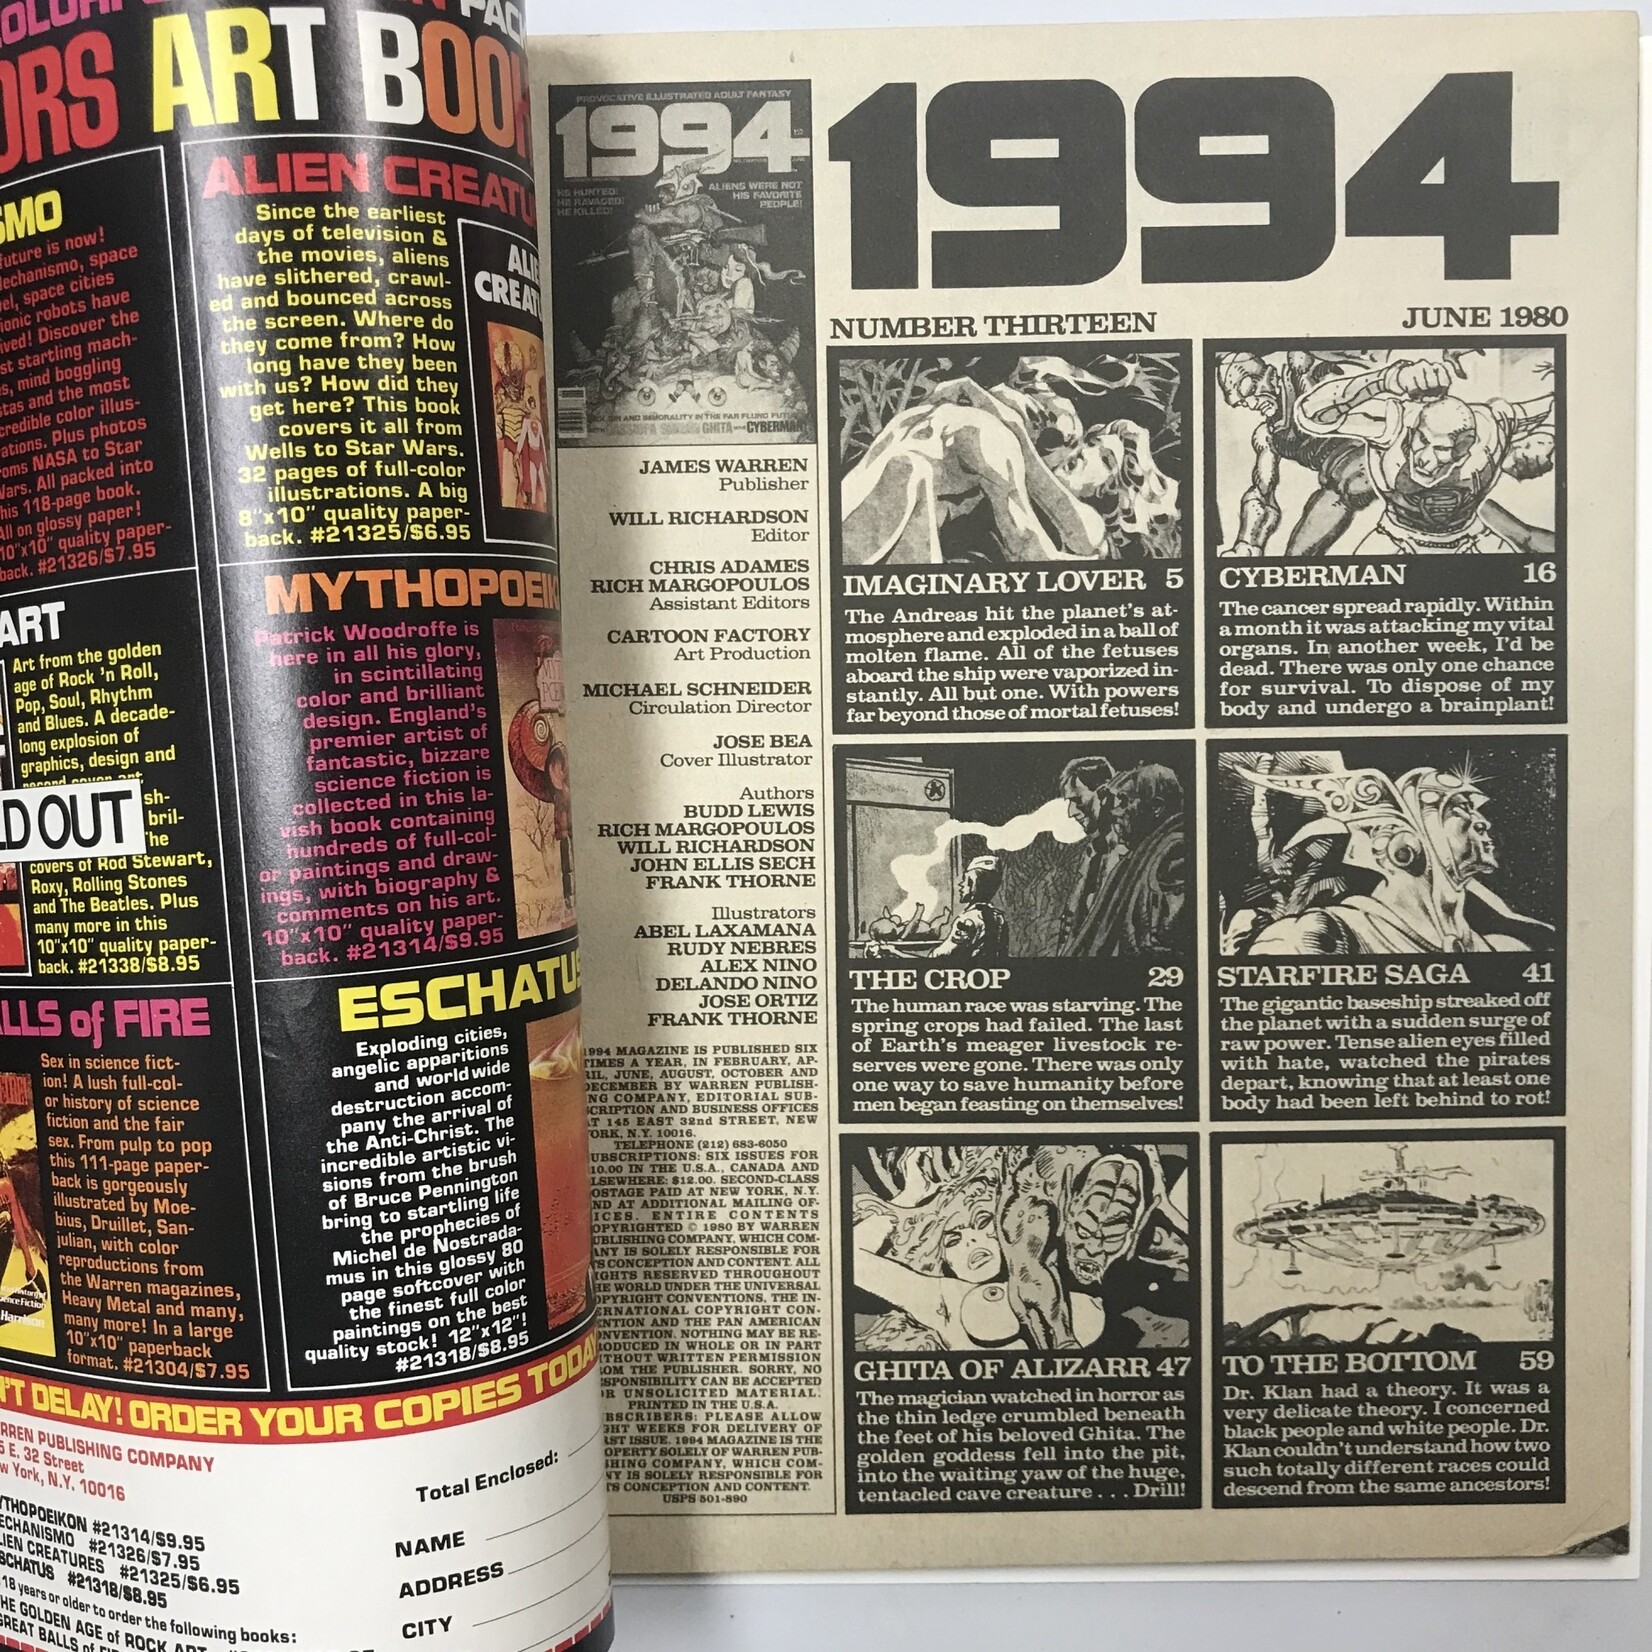 1994 - #13 June 1980 - Magazine (18+)